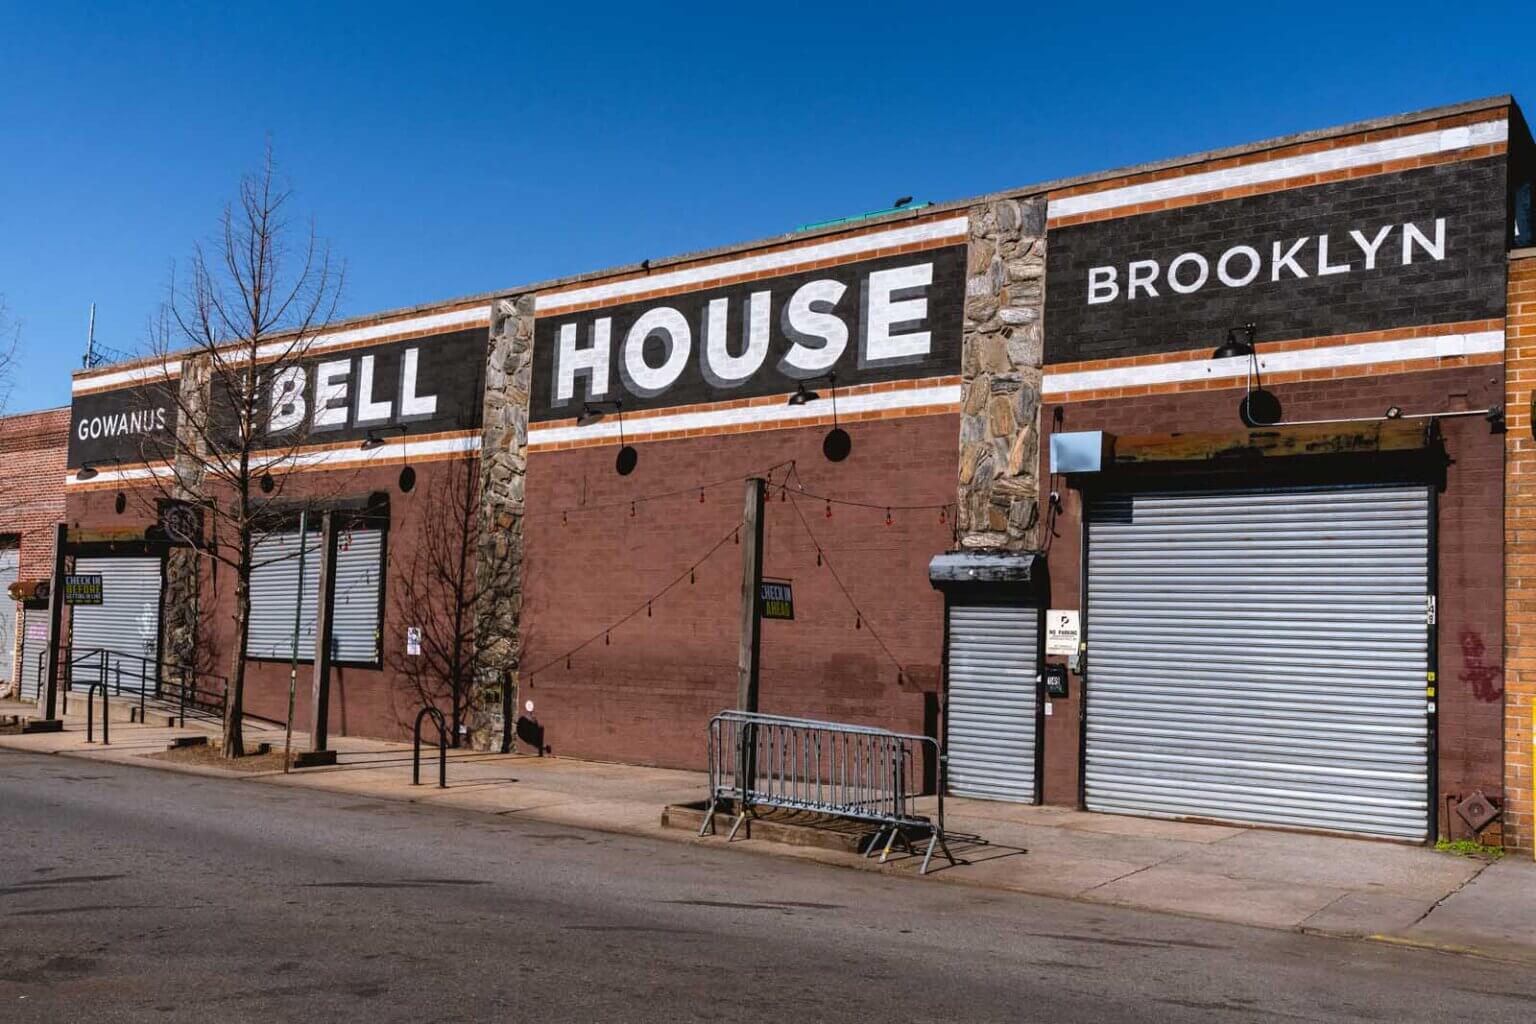 The Bell House in Gowanus Brooklyn